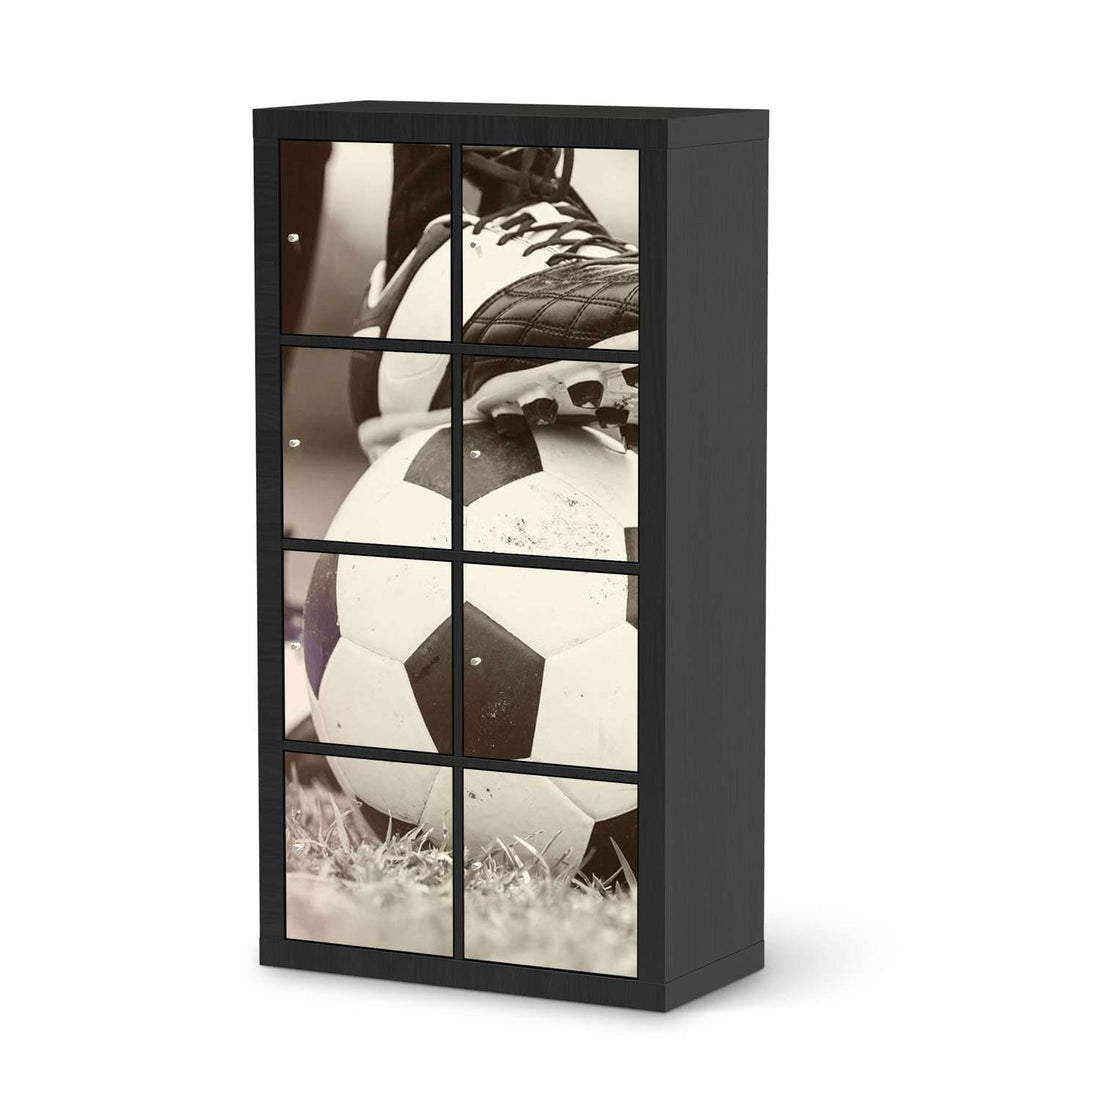 Folie für Möbel Kick it - IKEA Kallax Regal 8 Türen - schwarz